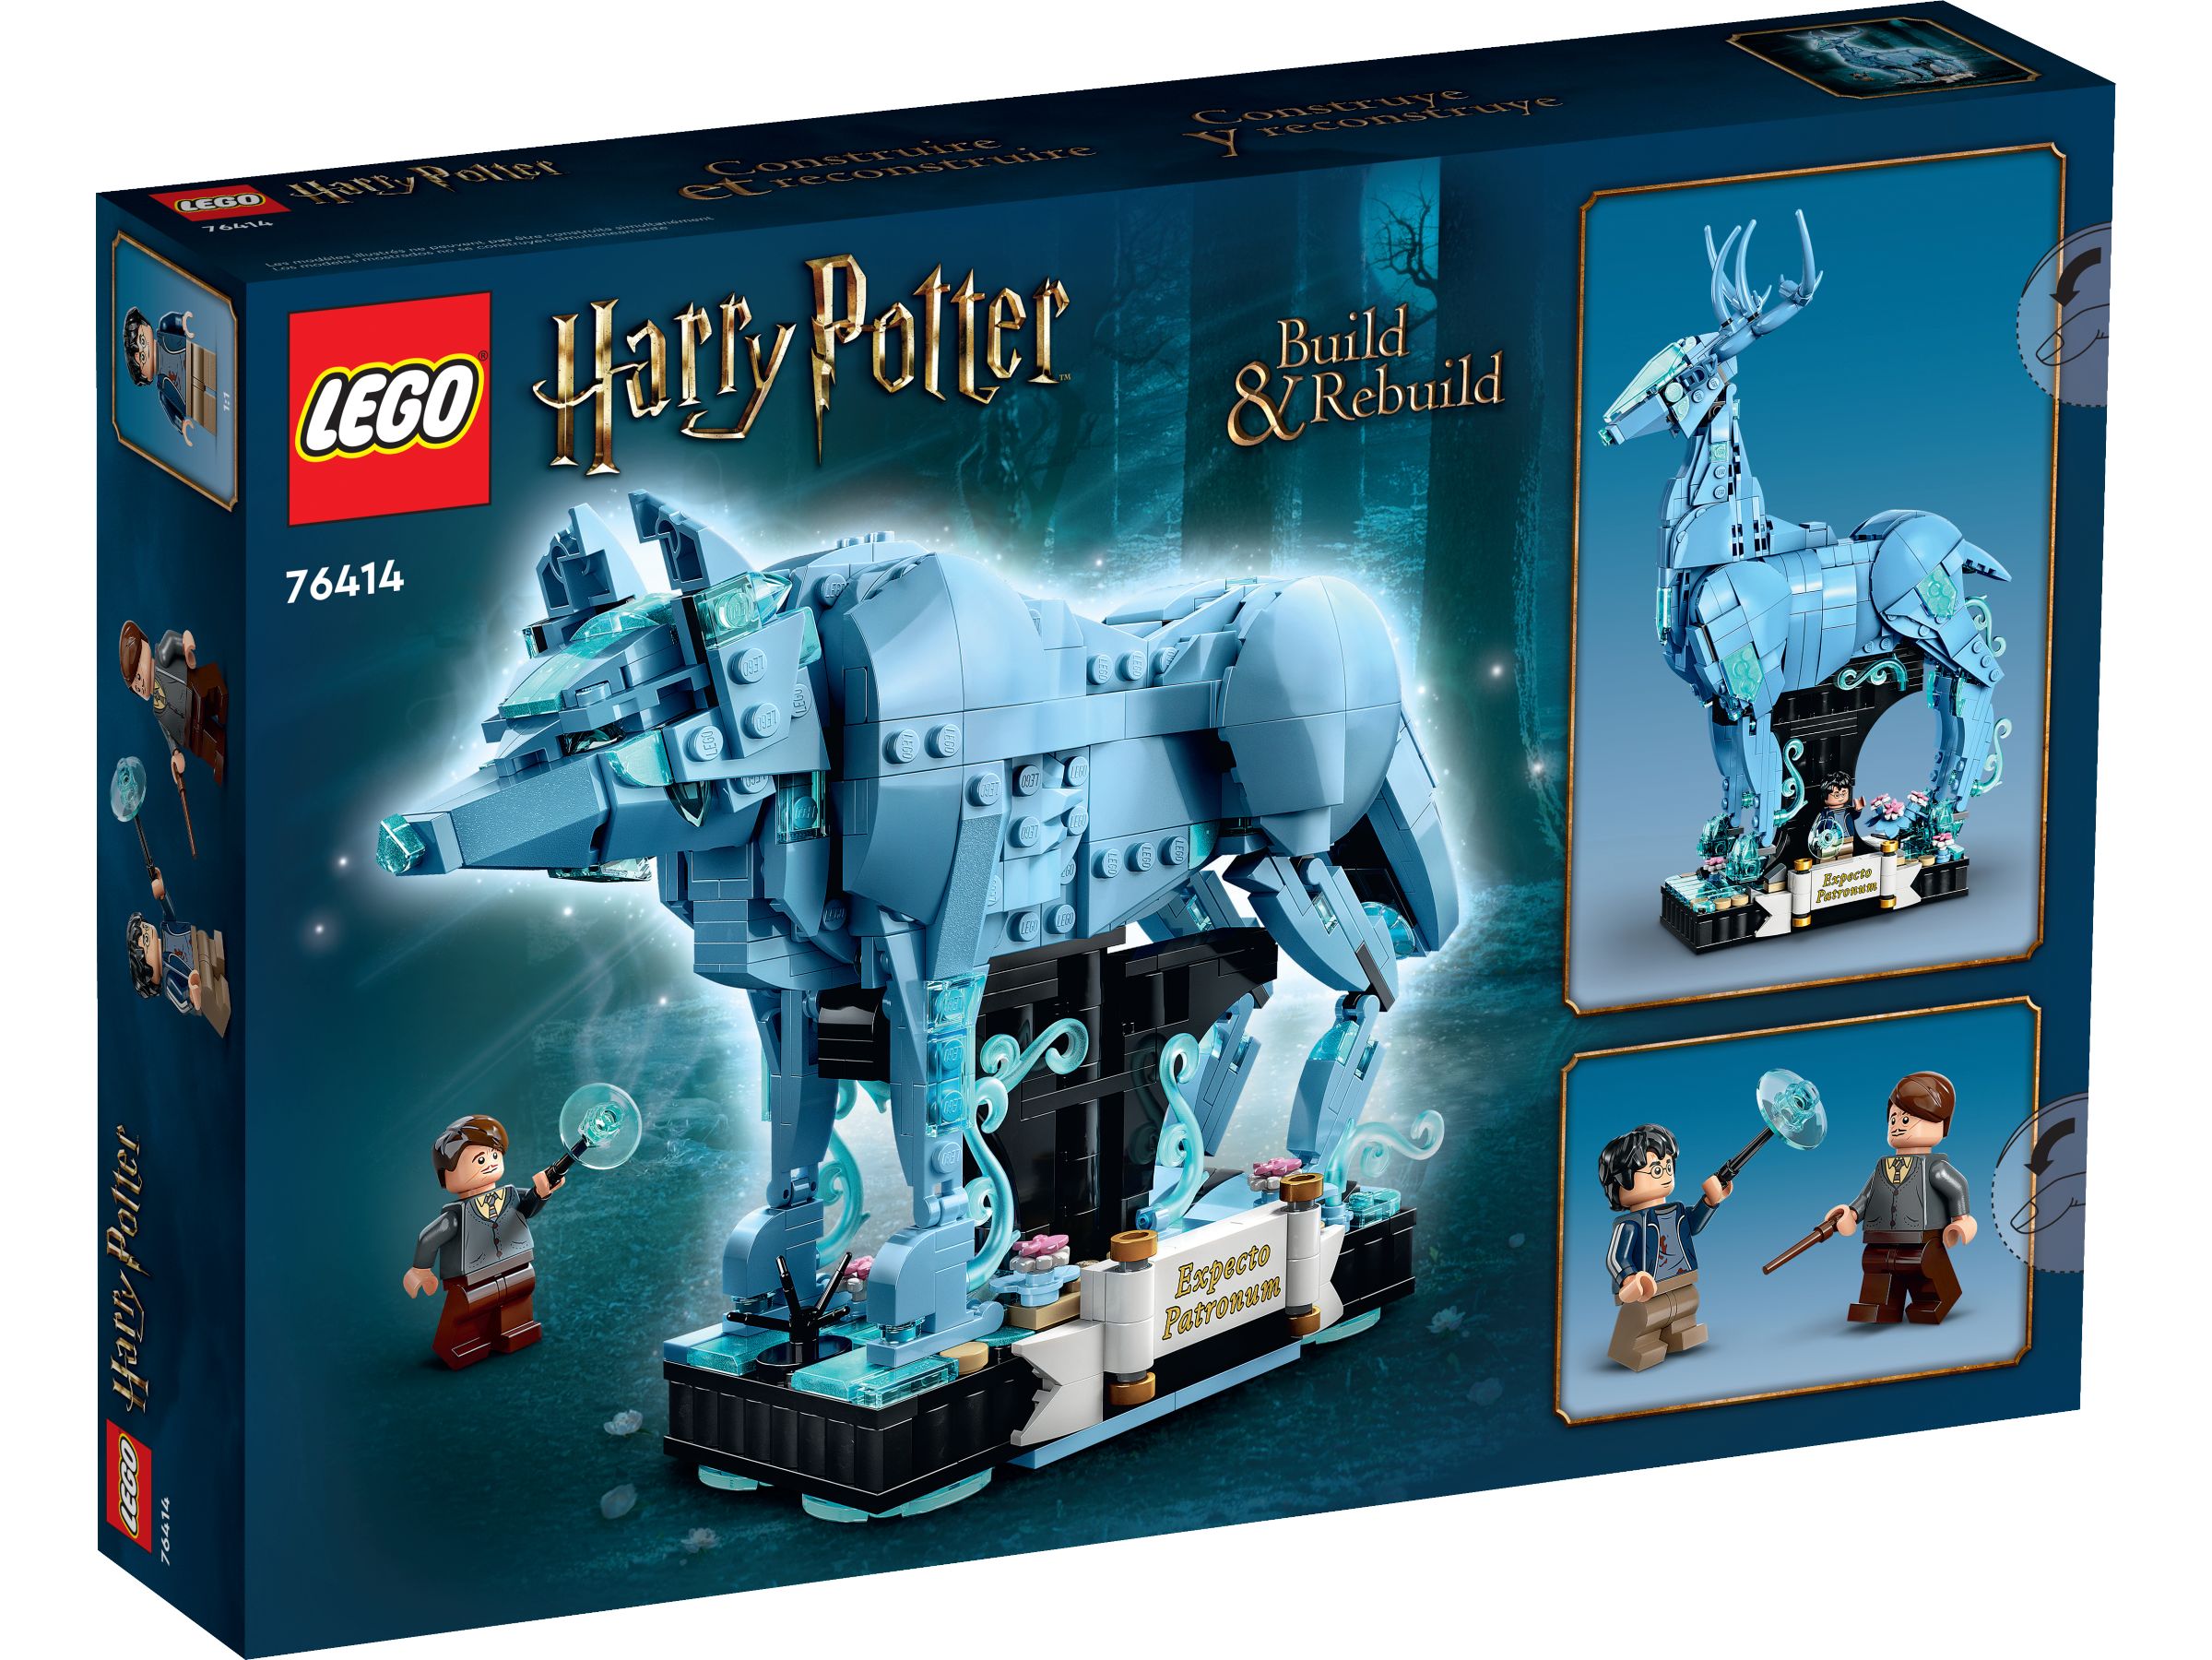 LEGO Harry Potter 76414 Expecto Patronum LEGO_76414_alt4.jpg